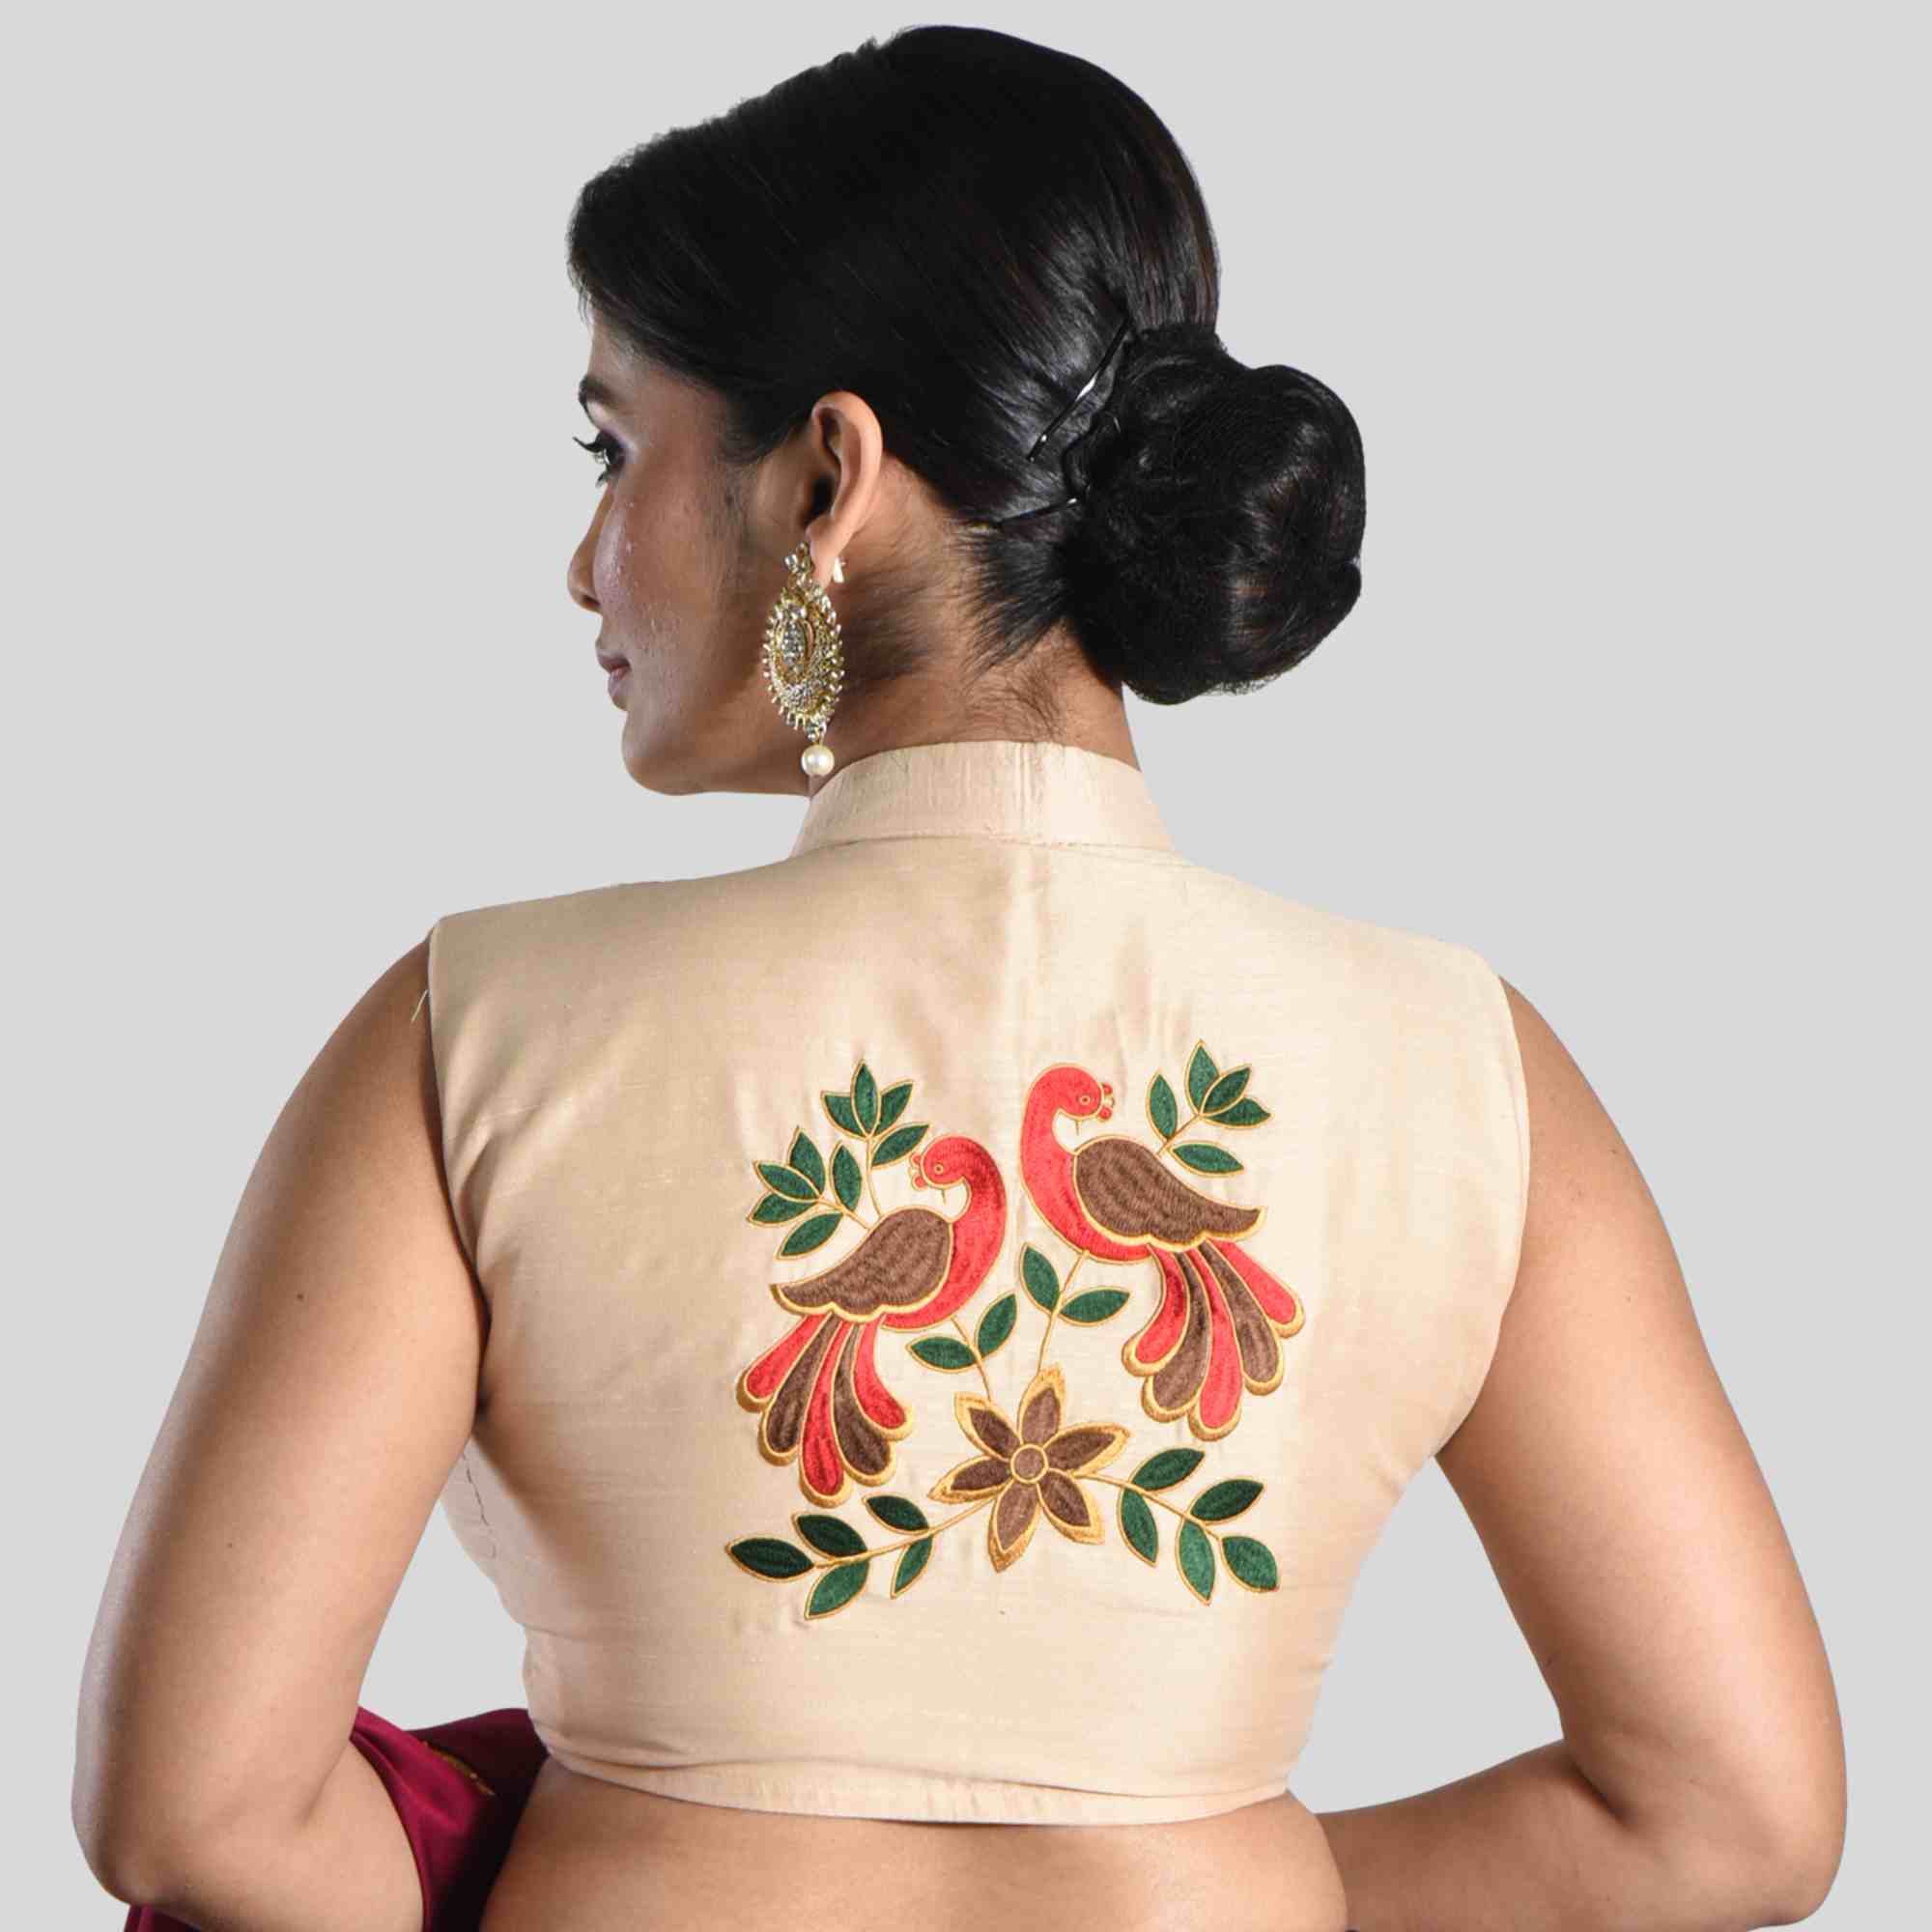 mandarin collar sleeveless blouse with Bird embroidery at back